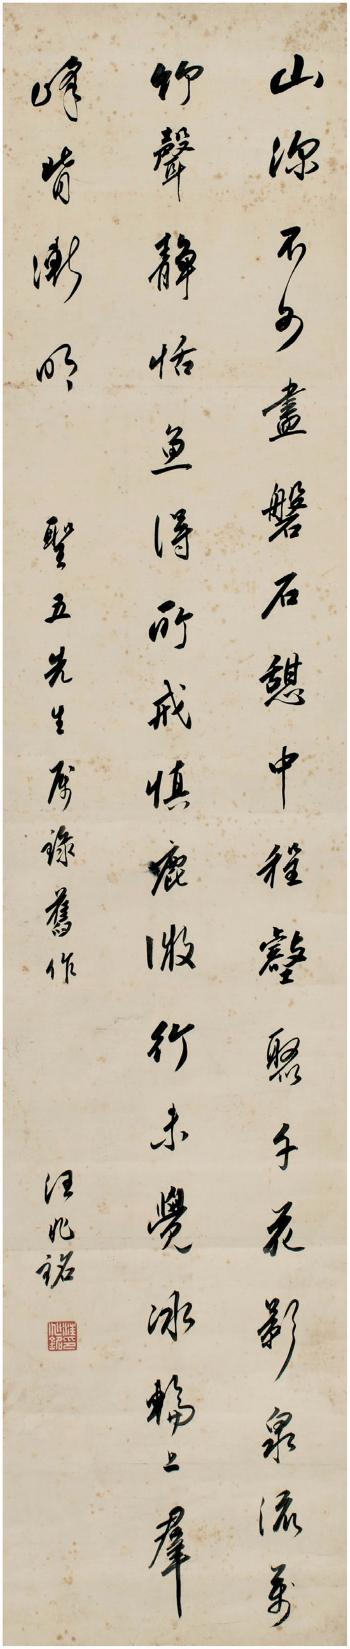 Five-Character Poem in Running Script by 
																	 Wang Jingwei